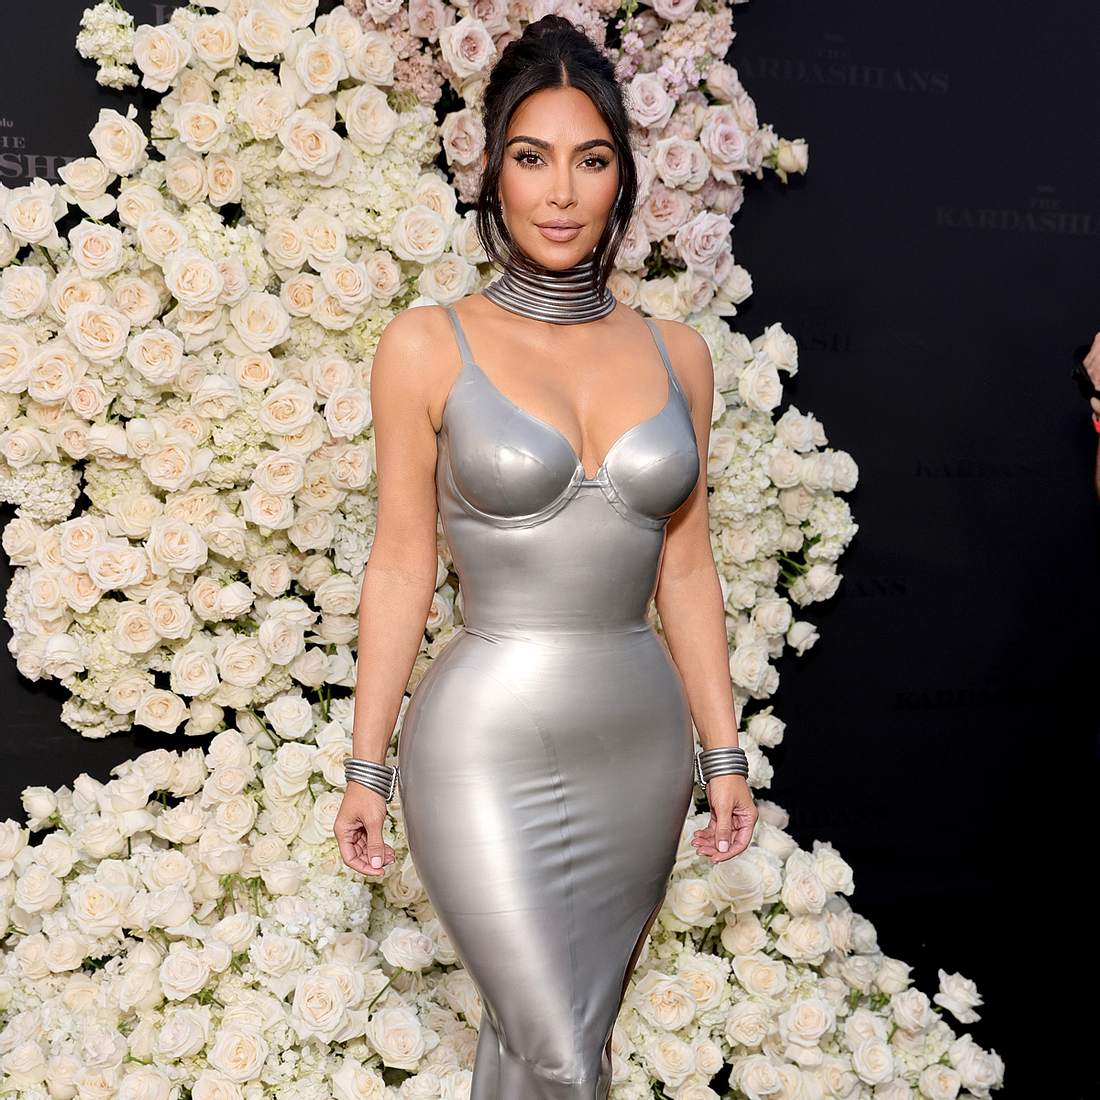 Unbeliebte Stars: Kim Kardashian